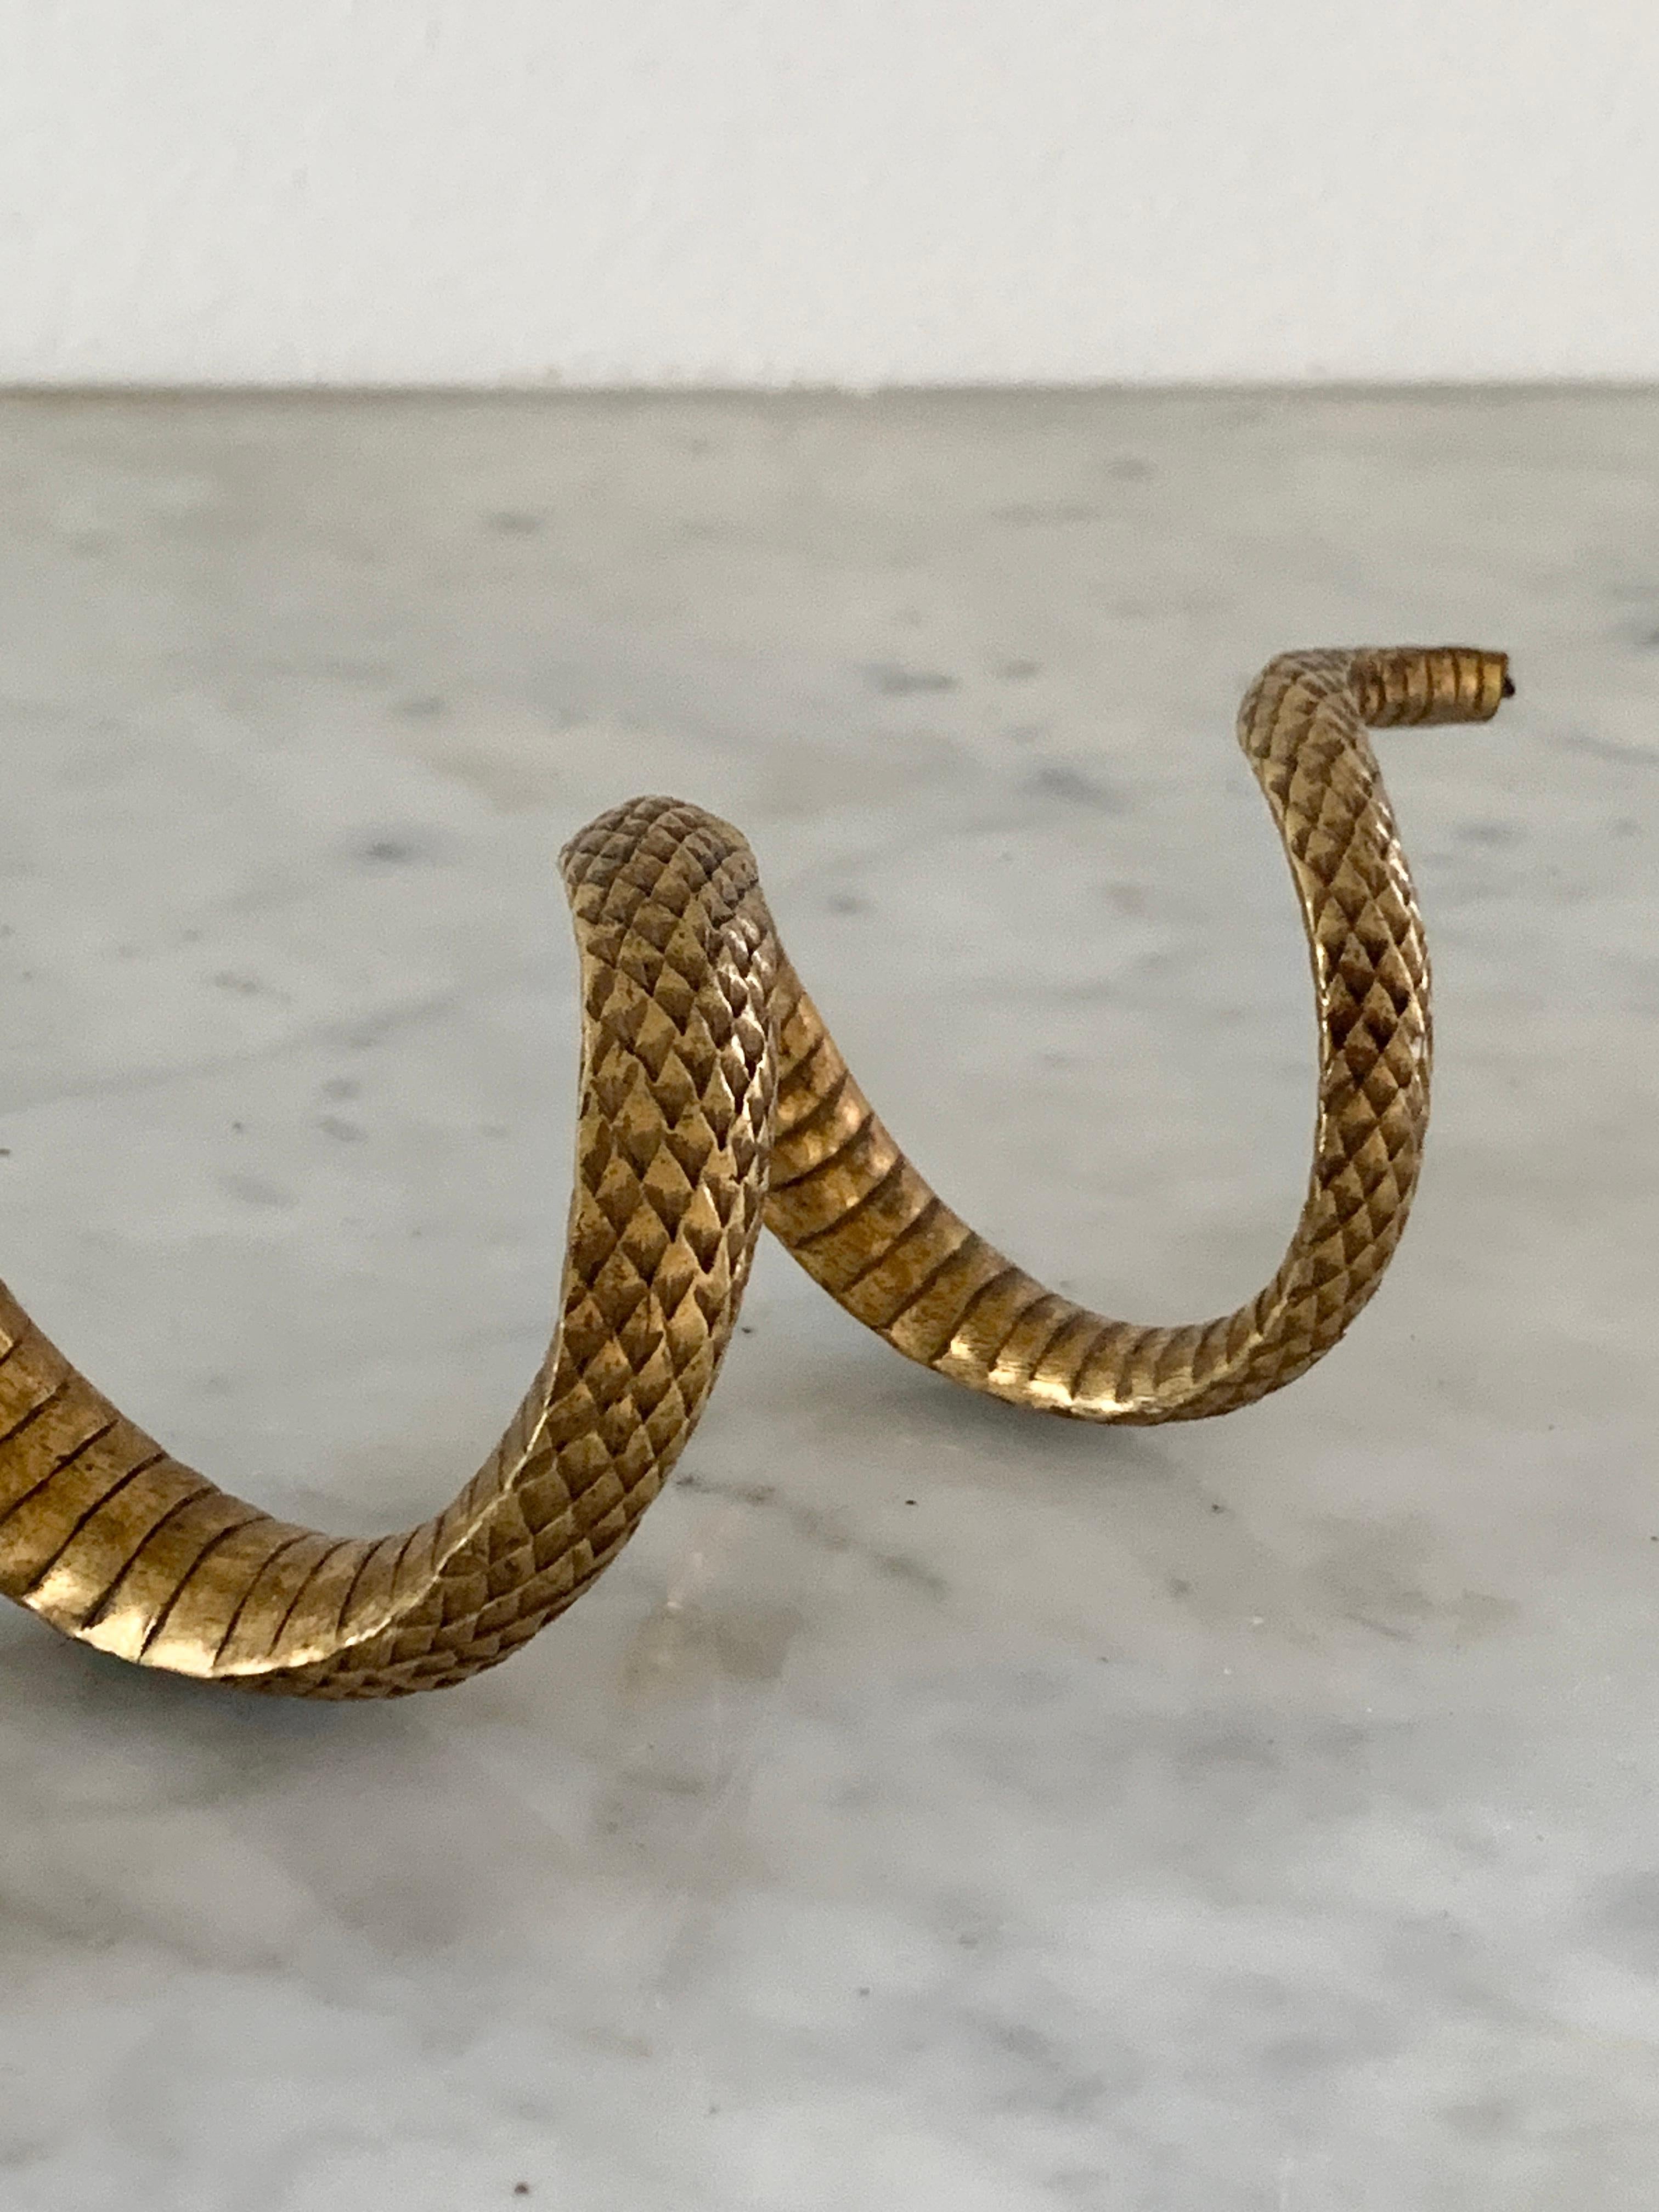 Vintage Cast Brass Coiled Serpent Snake For Sale 1